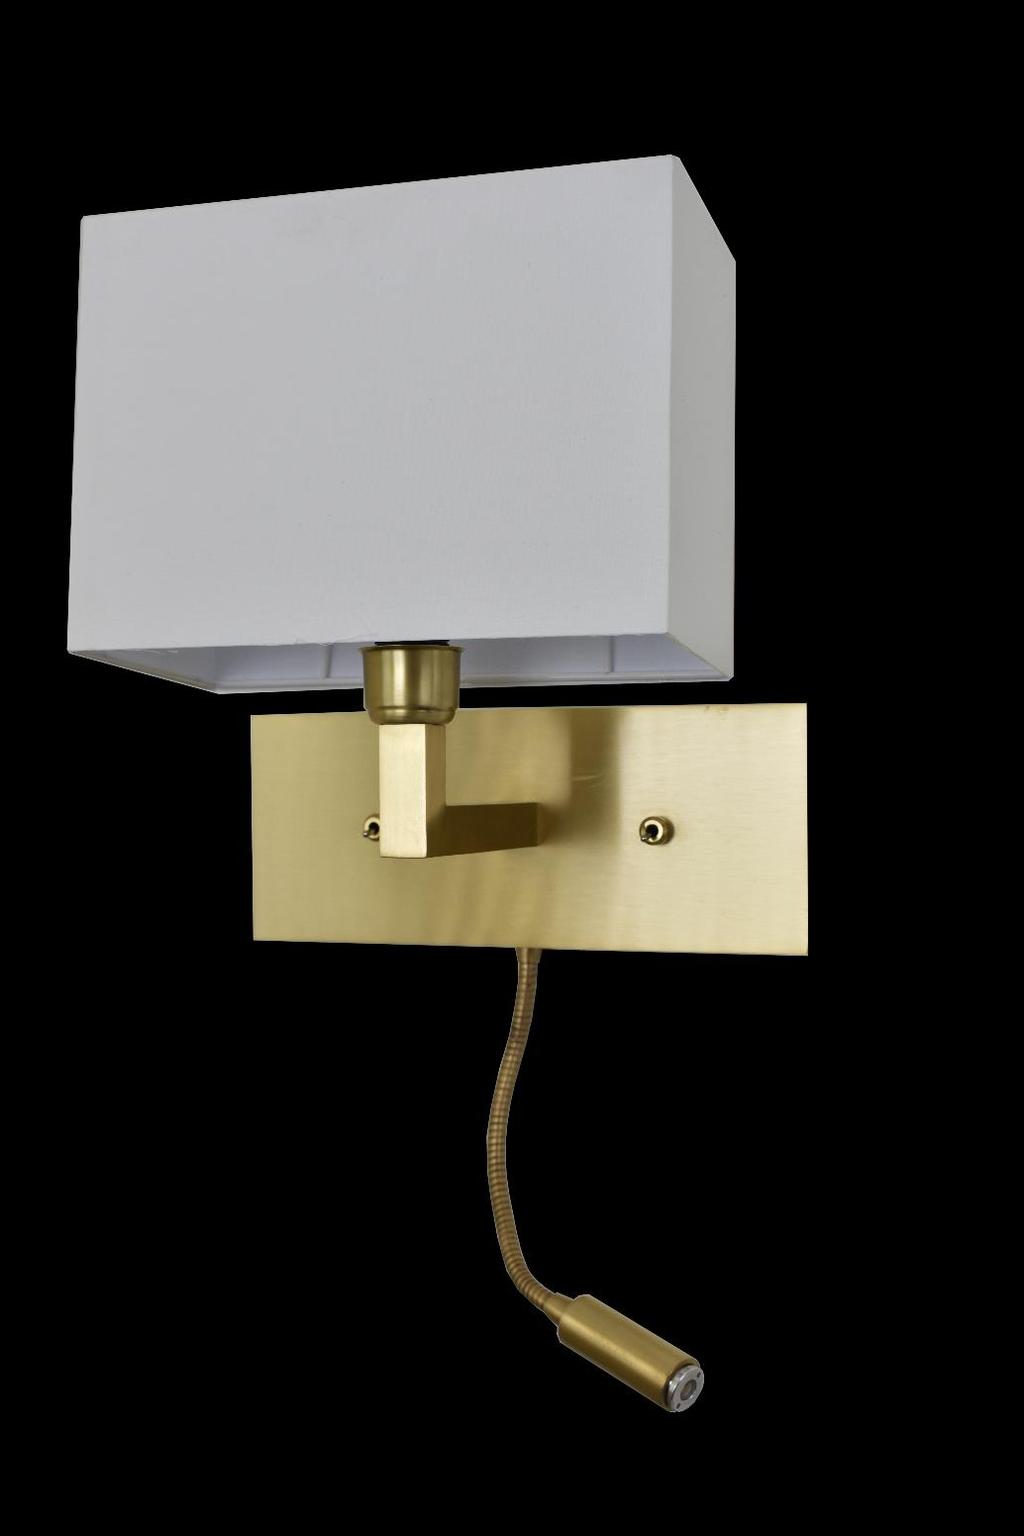 REF 2018006 CAJU Aplique Wall Lamp A 37cm FLEX L 25cm P 17cm Max Pot: 1x40w E14 Led 3v REF